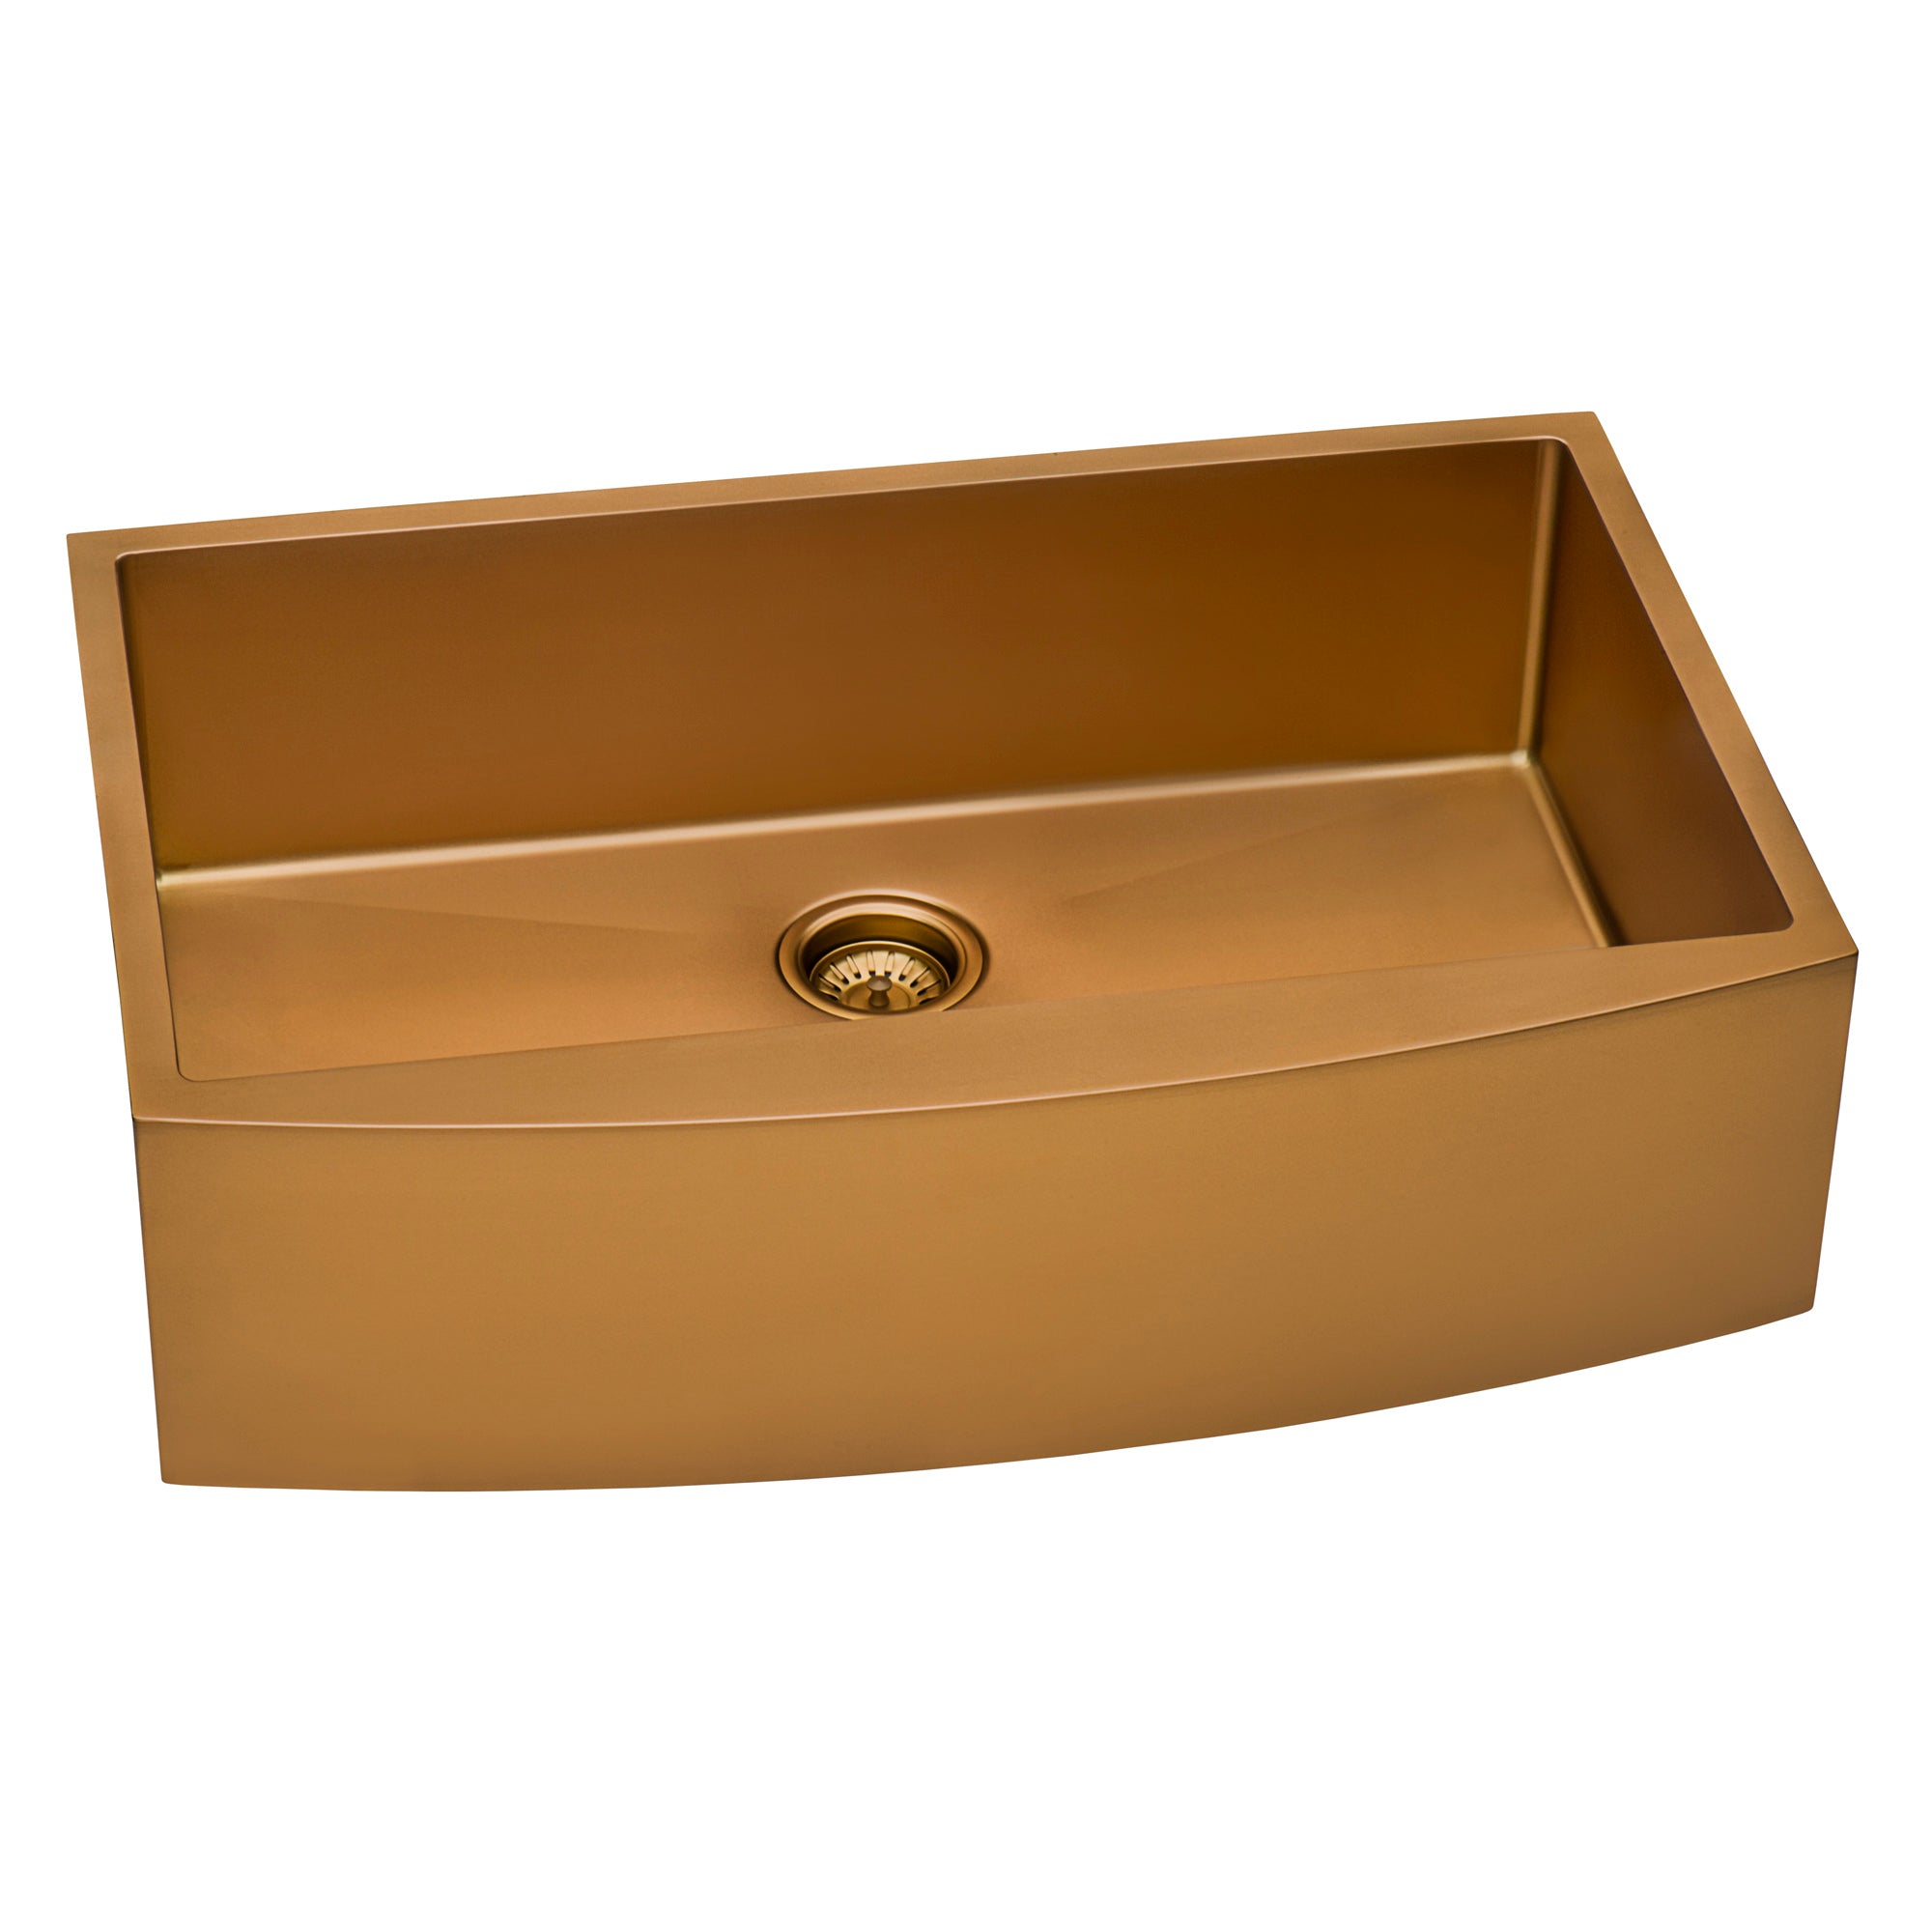 Ruvati 33" Copper Tone Matte Bronze Apron Front Stainless Steel Kitchen Sink